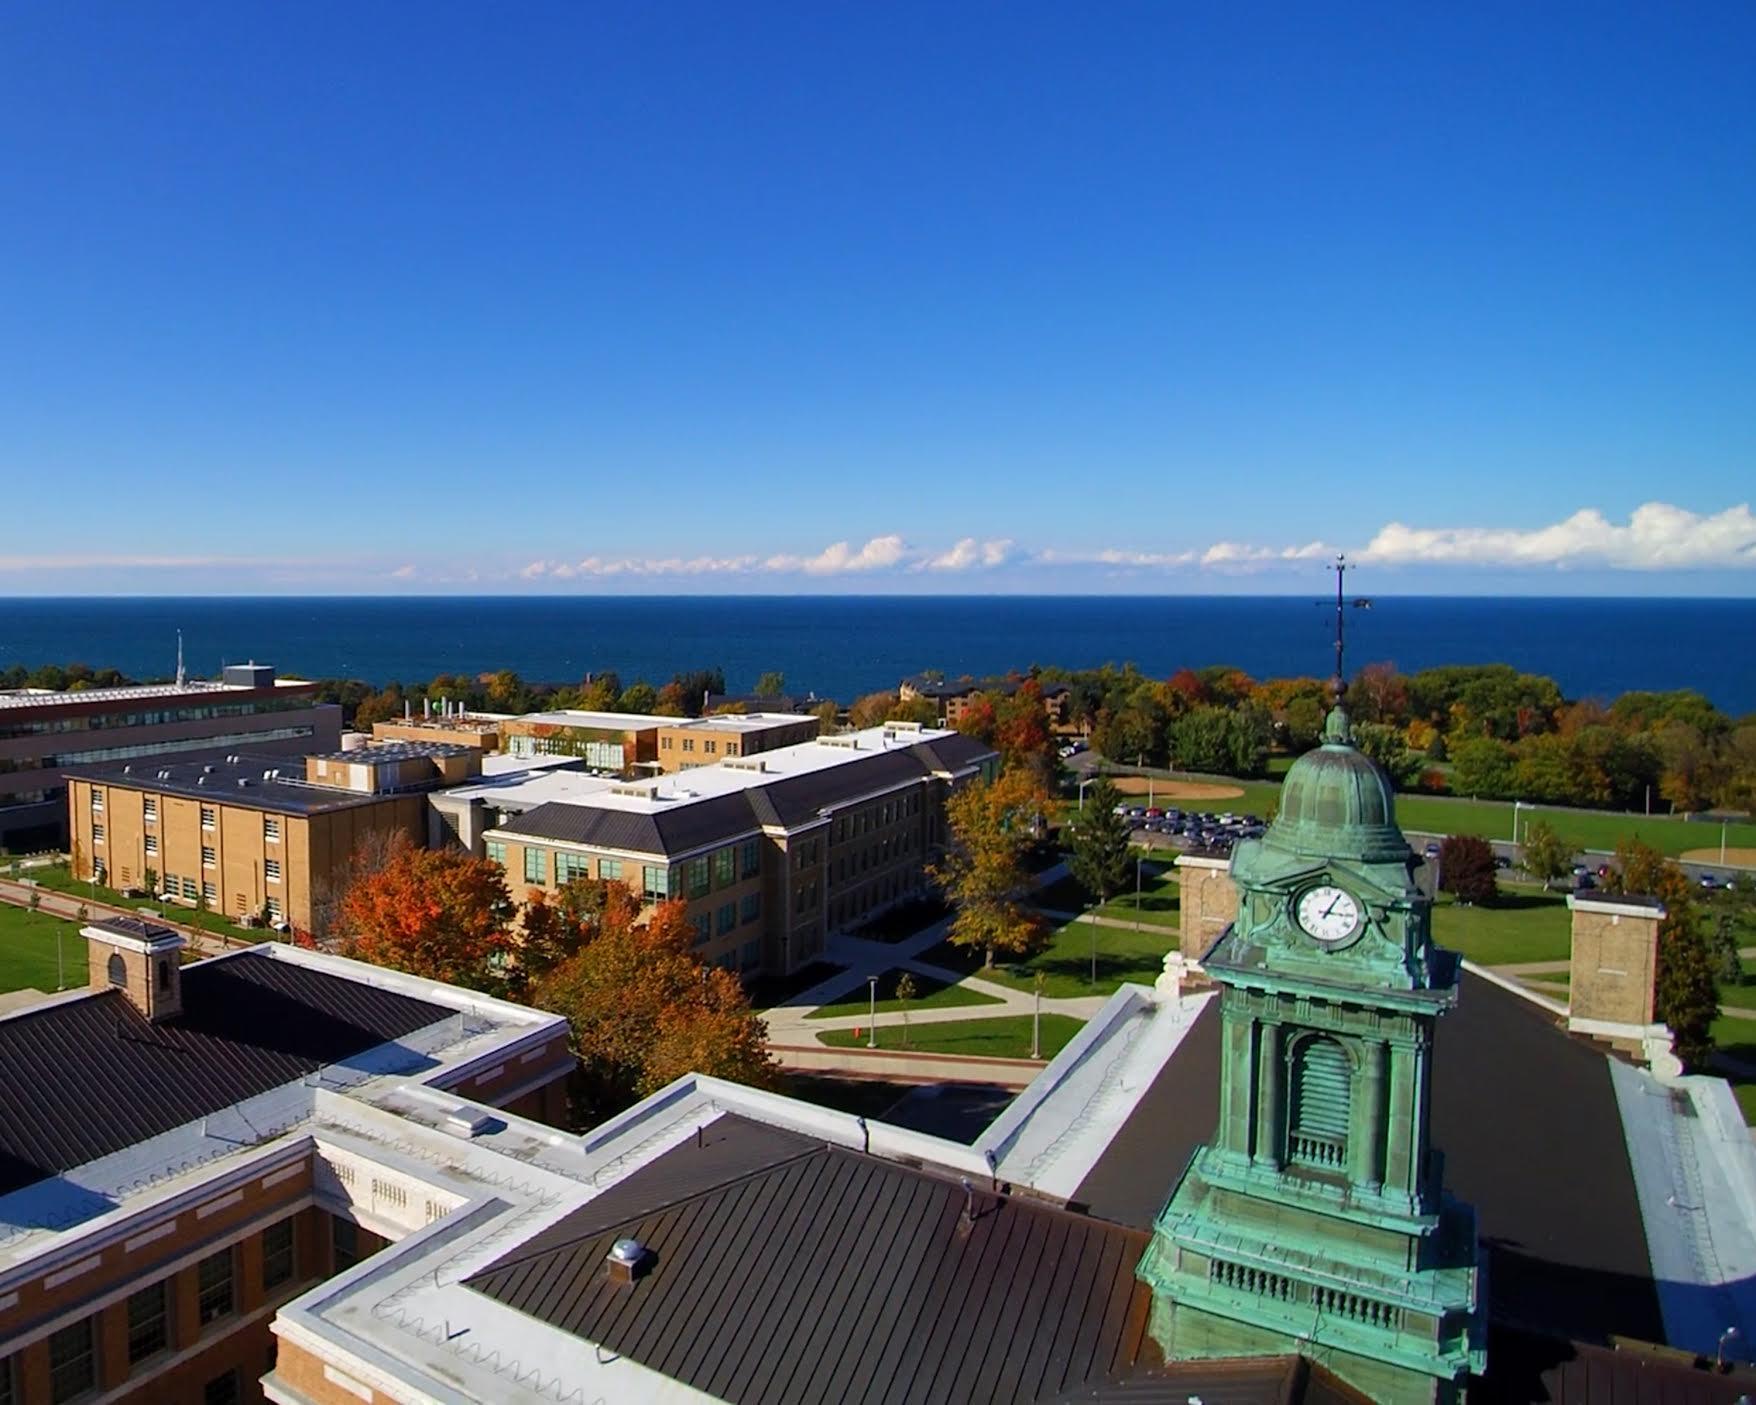 SUNY Oswego earns top rankings from U.S. News & World Report SUNY